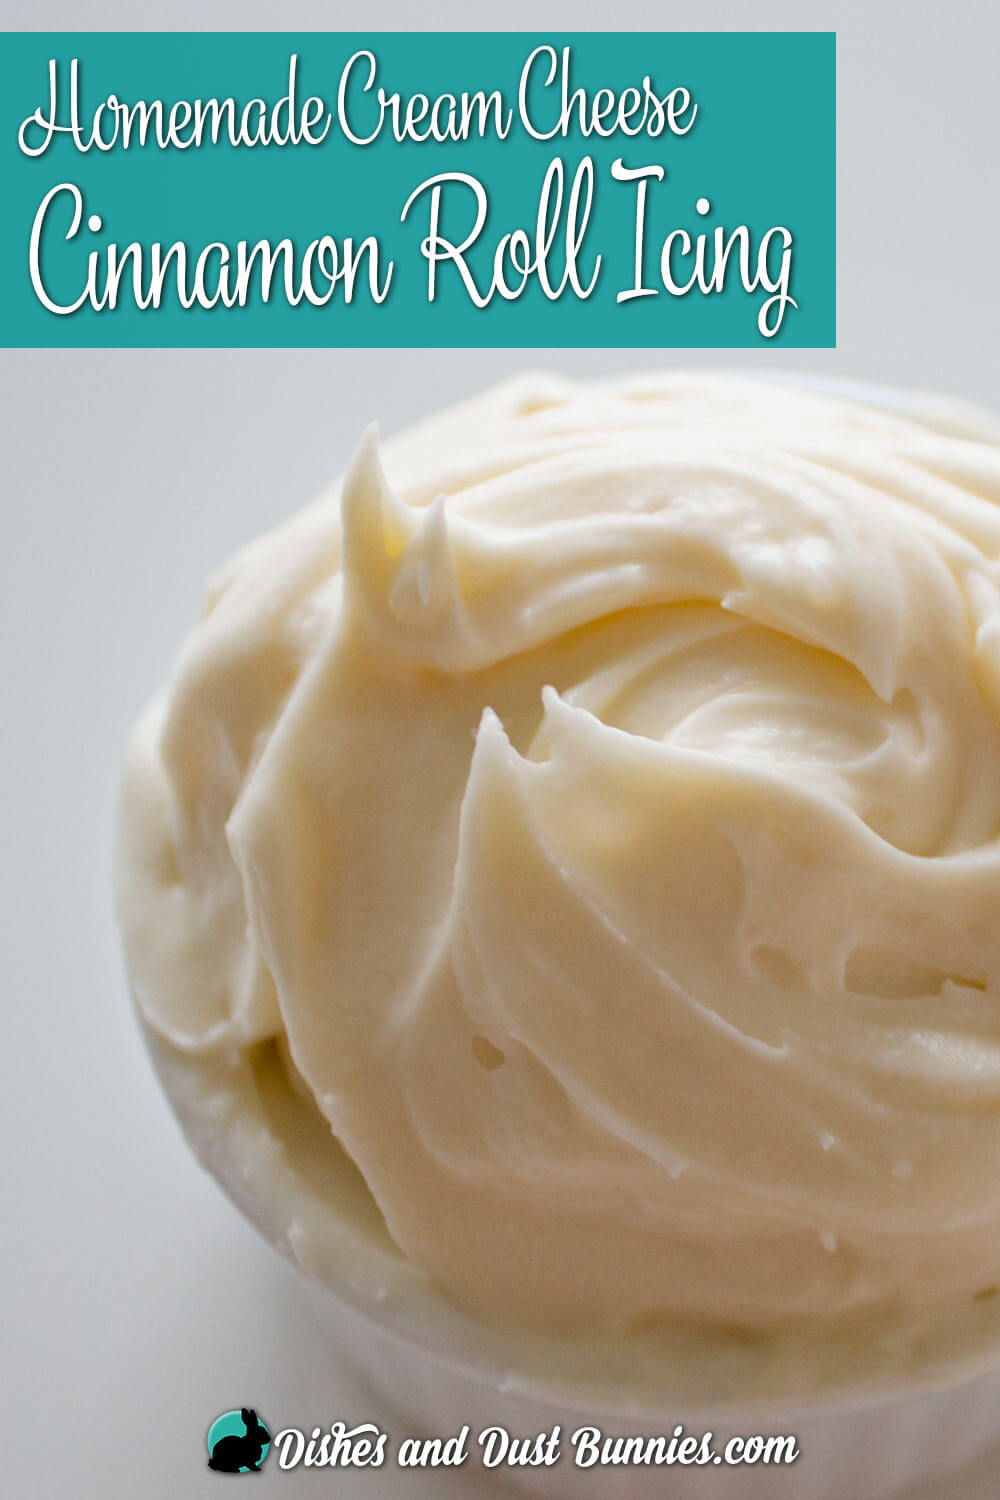 Homemade Cream Cheese Cinnamon Roll Icing from dishesanddustbunnies.com